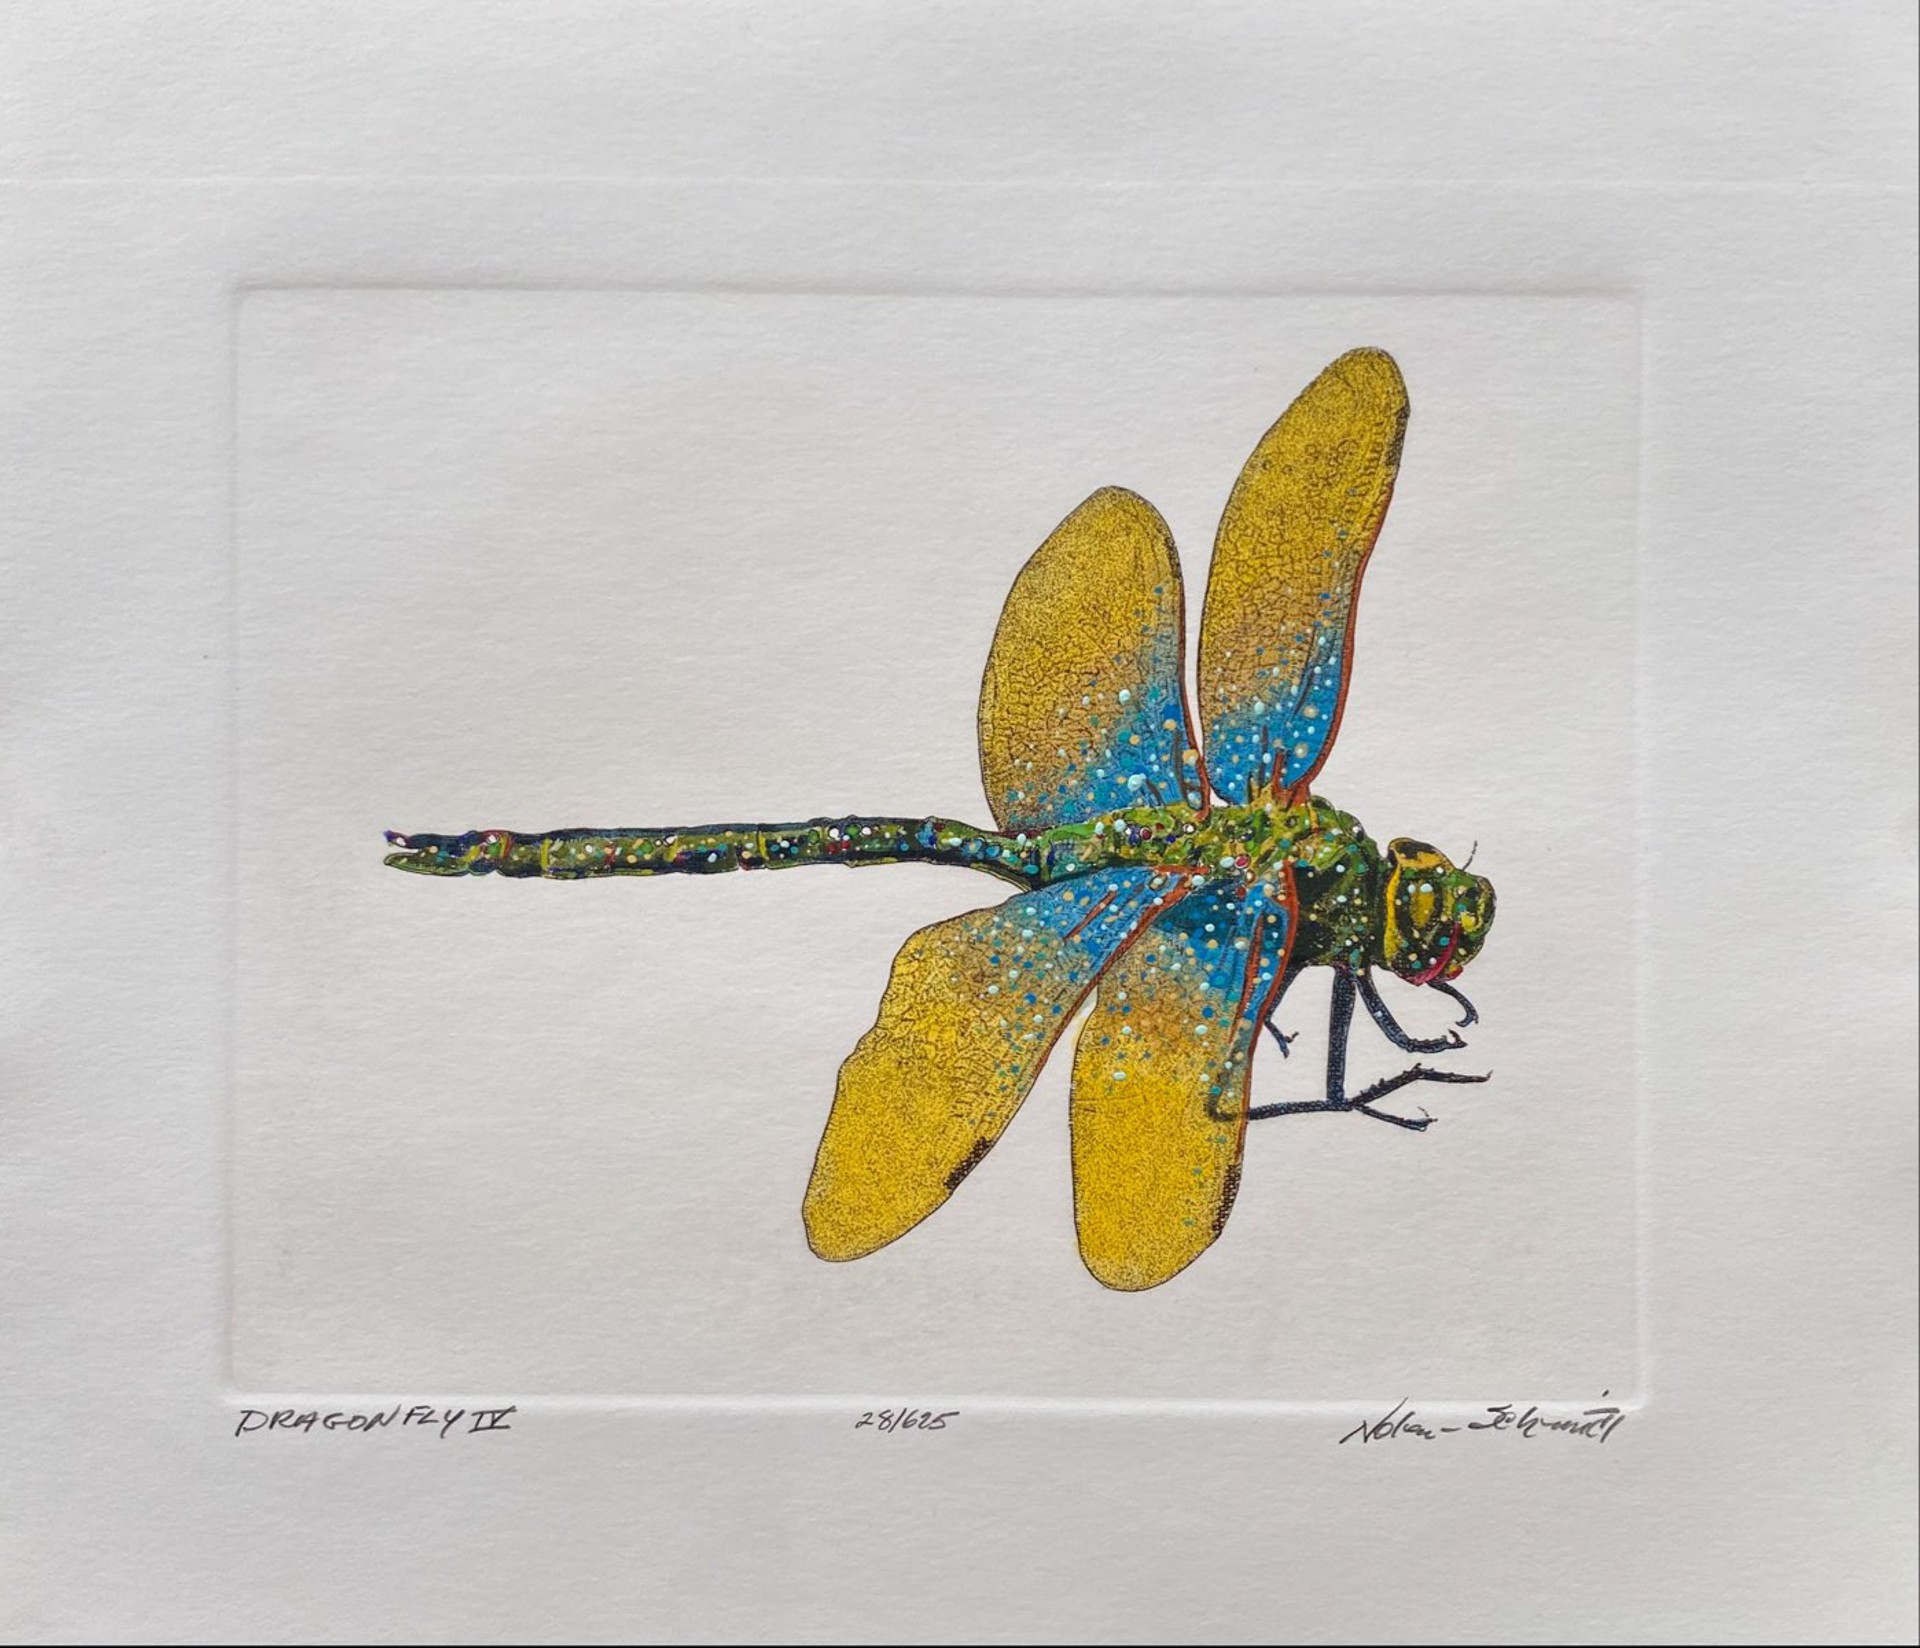 Dragonfly IV  28/625 by William Nolen-Schmidt